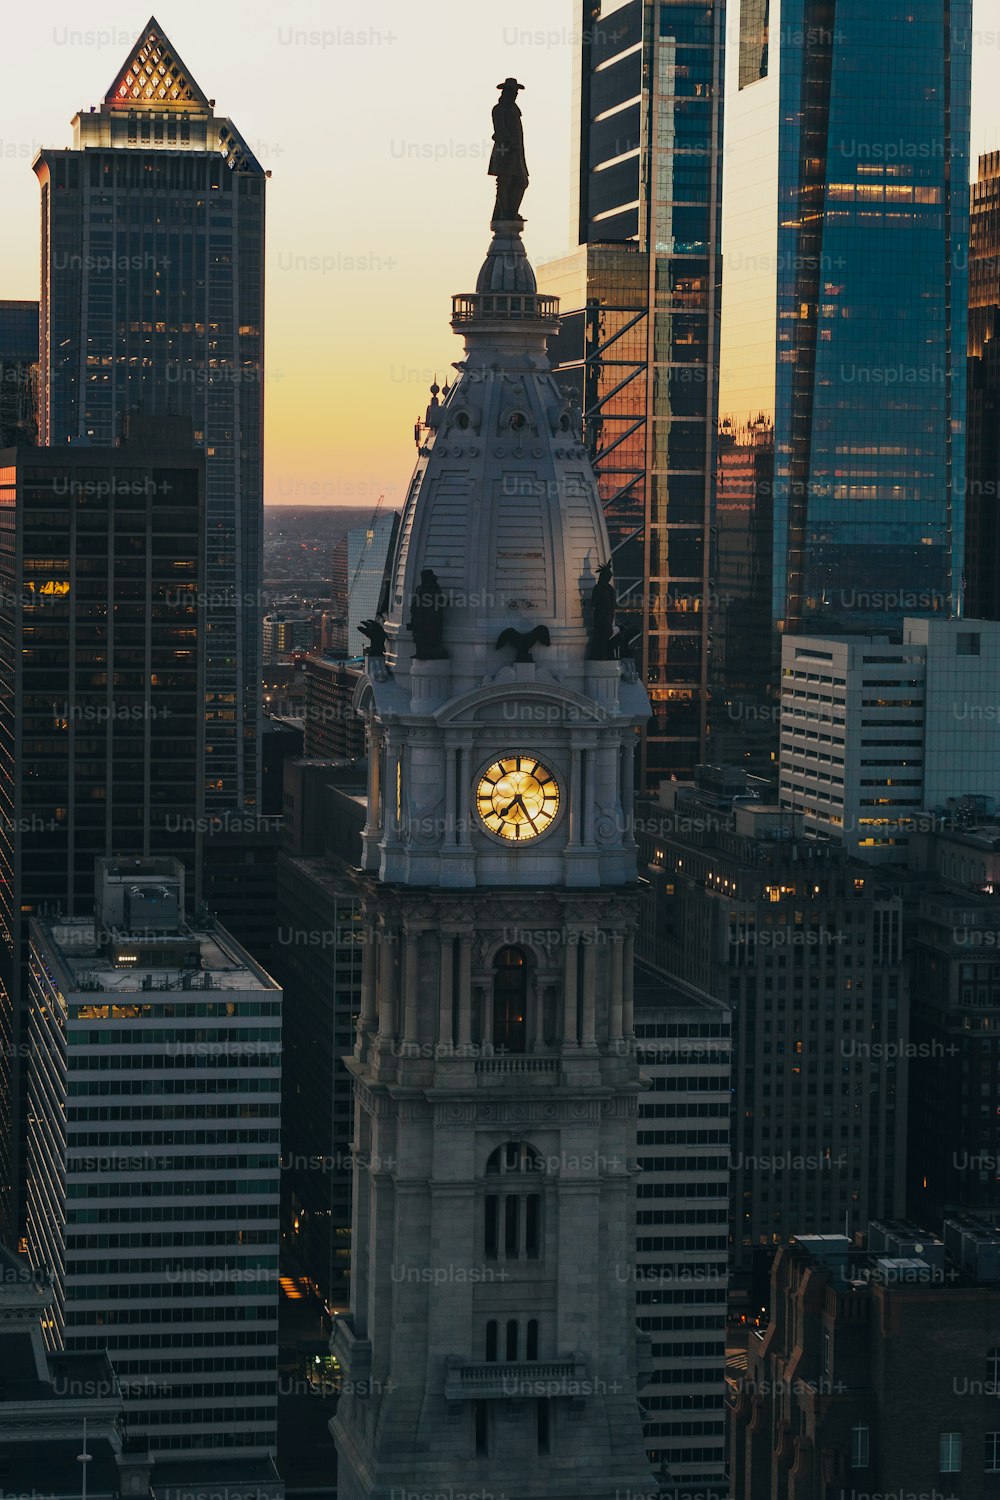 Un orologio su una torre in una città